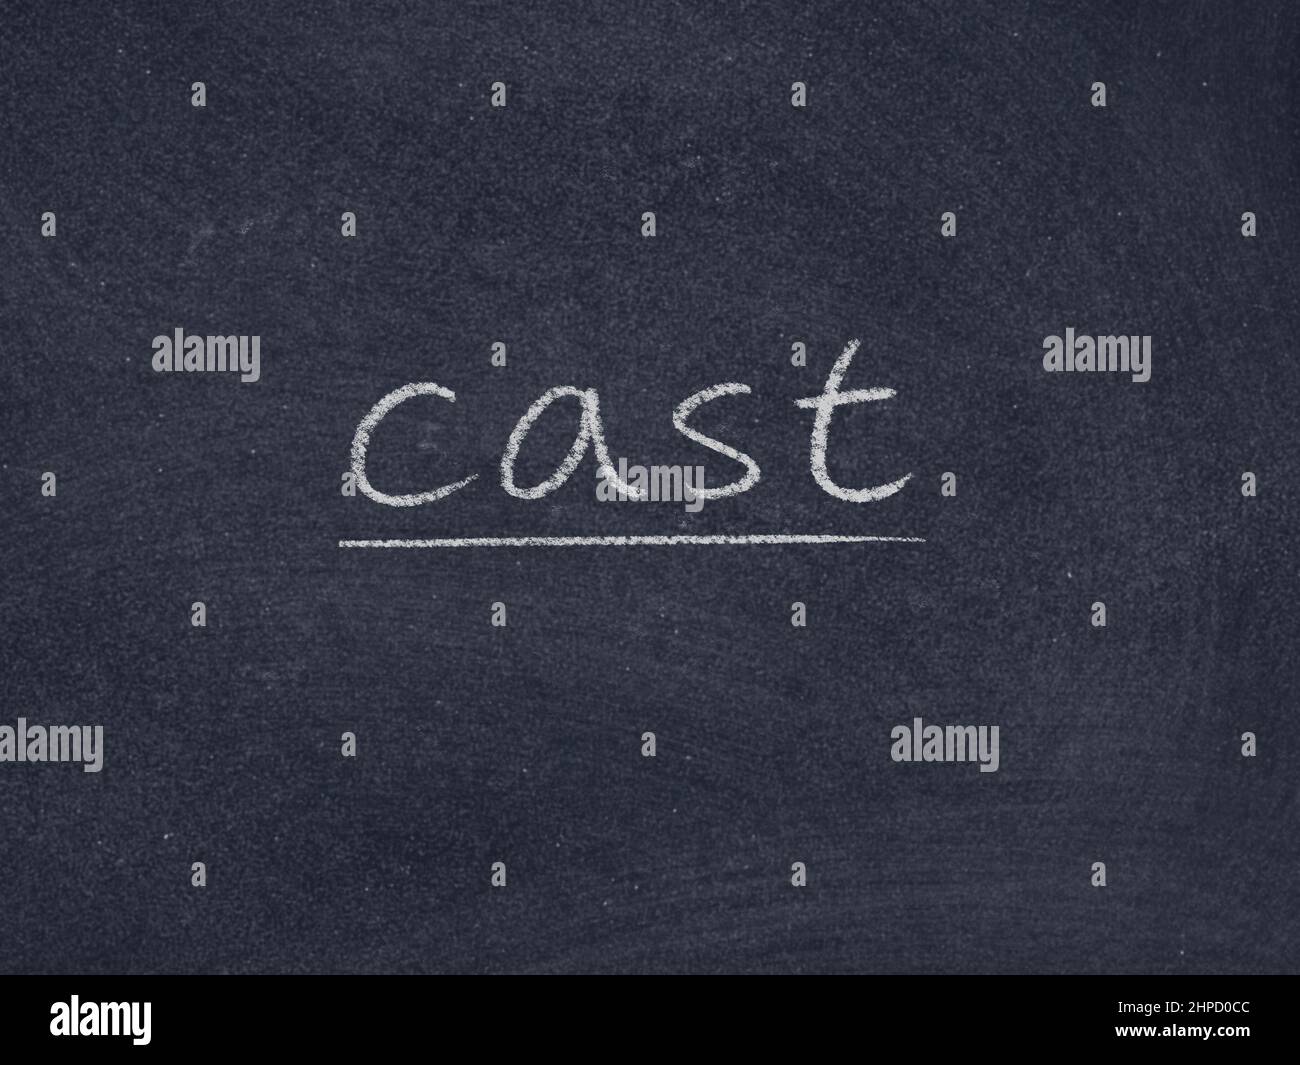 cast concept word on blackboard background Stock Photo